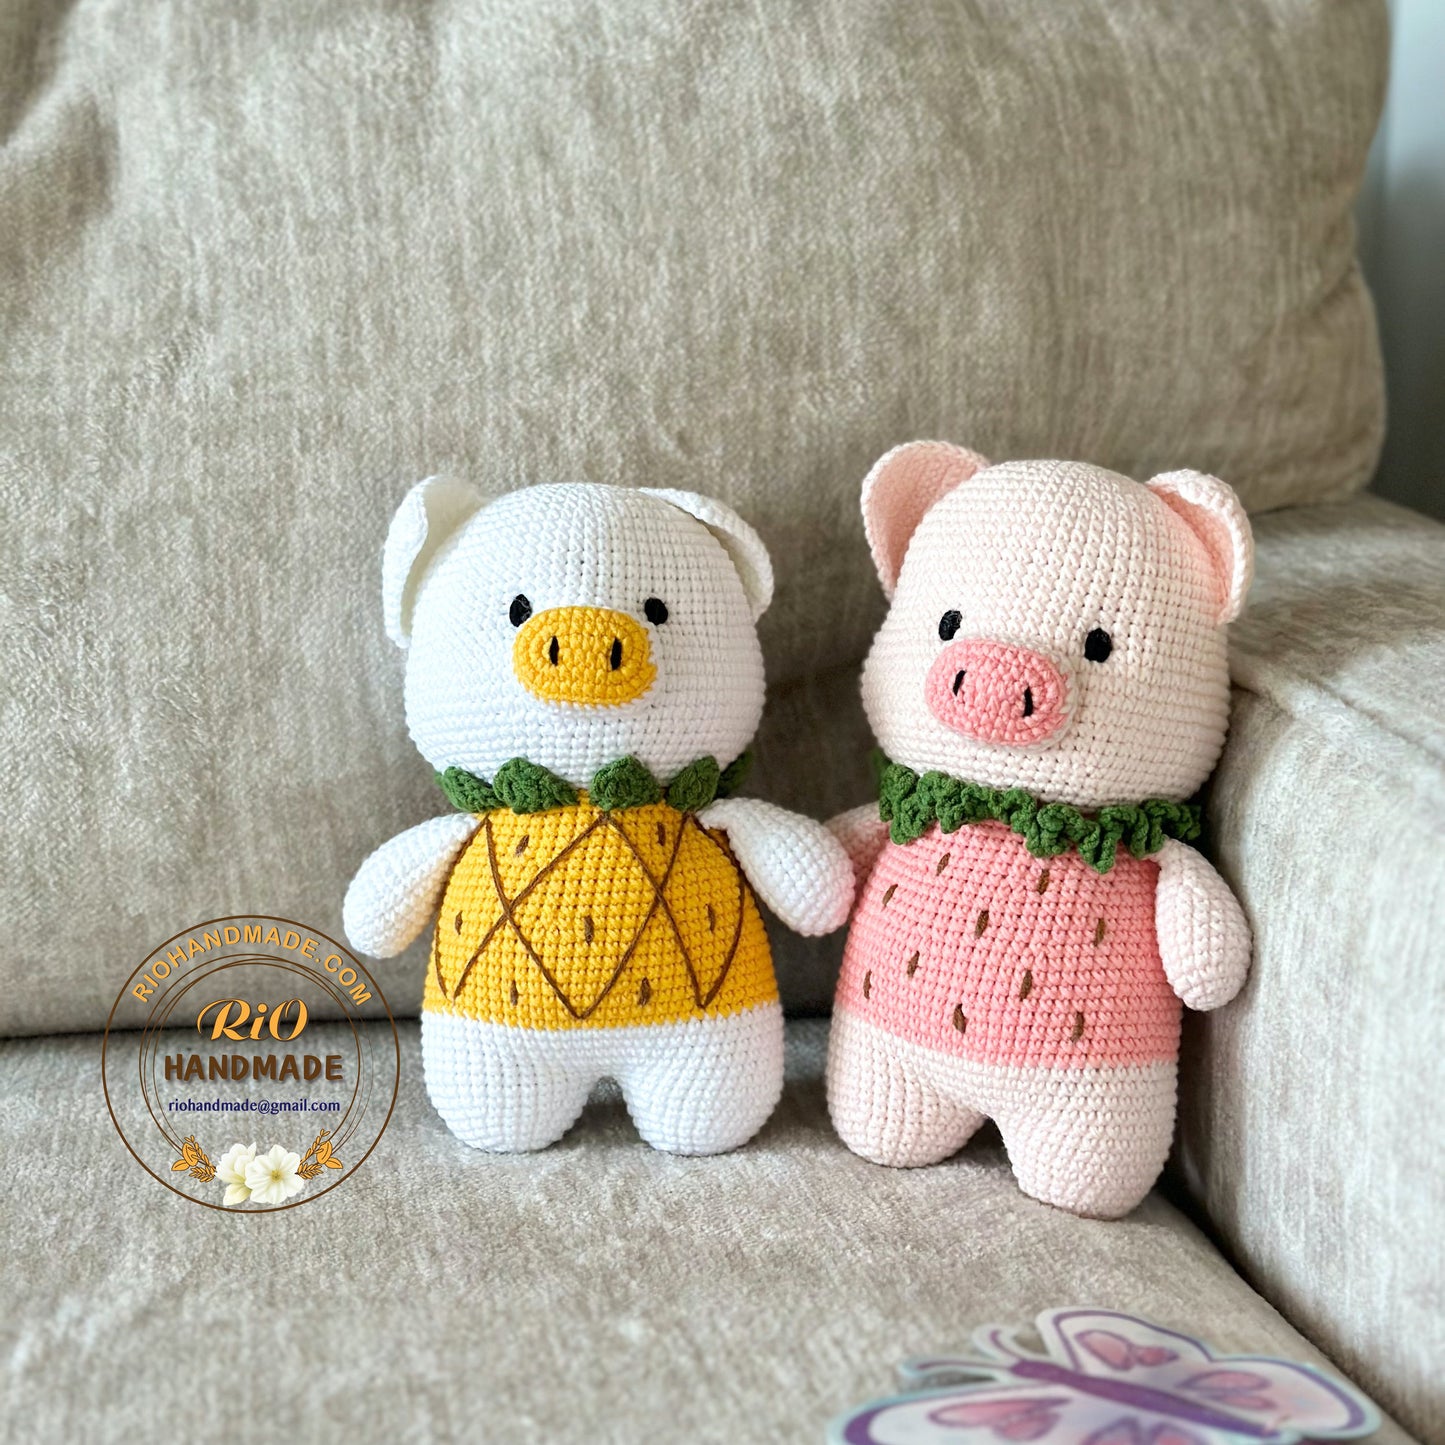 Handmade Yarn Cotton Pig Crochet, Amigurumi, Cute toy for baby, toddler, kid, adult hobby